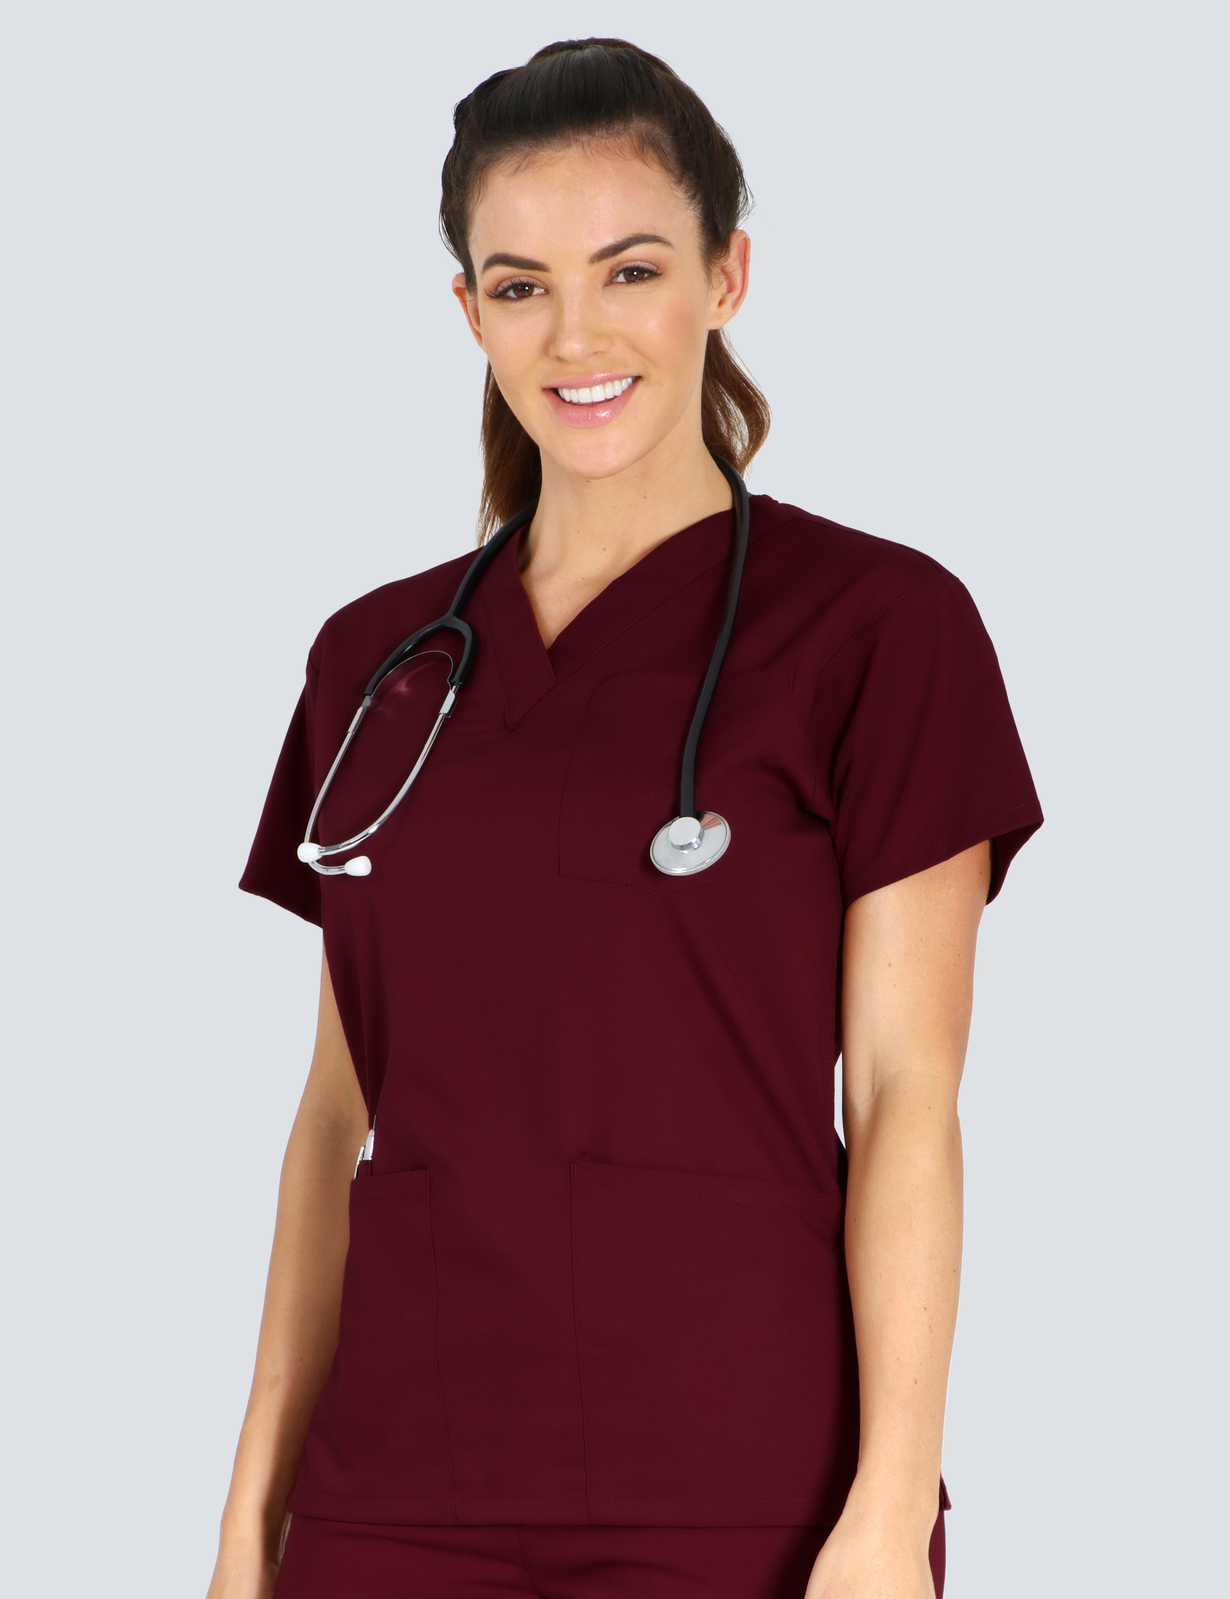 Queensland Children's Hospital Emergency Department Clinical Nurse  Uniform Top Bundle  (4 Pocket Top in Burgundy  incl Logos)